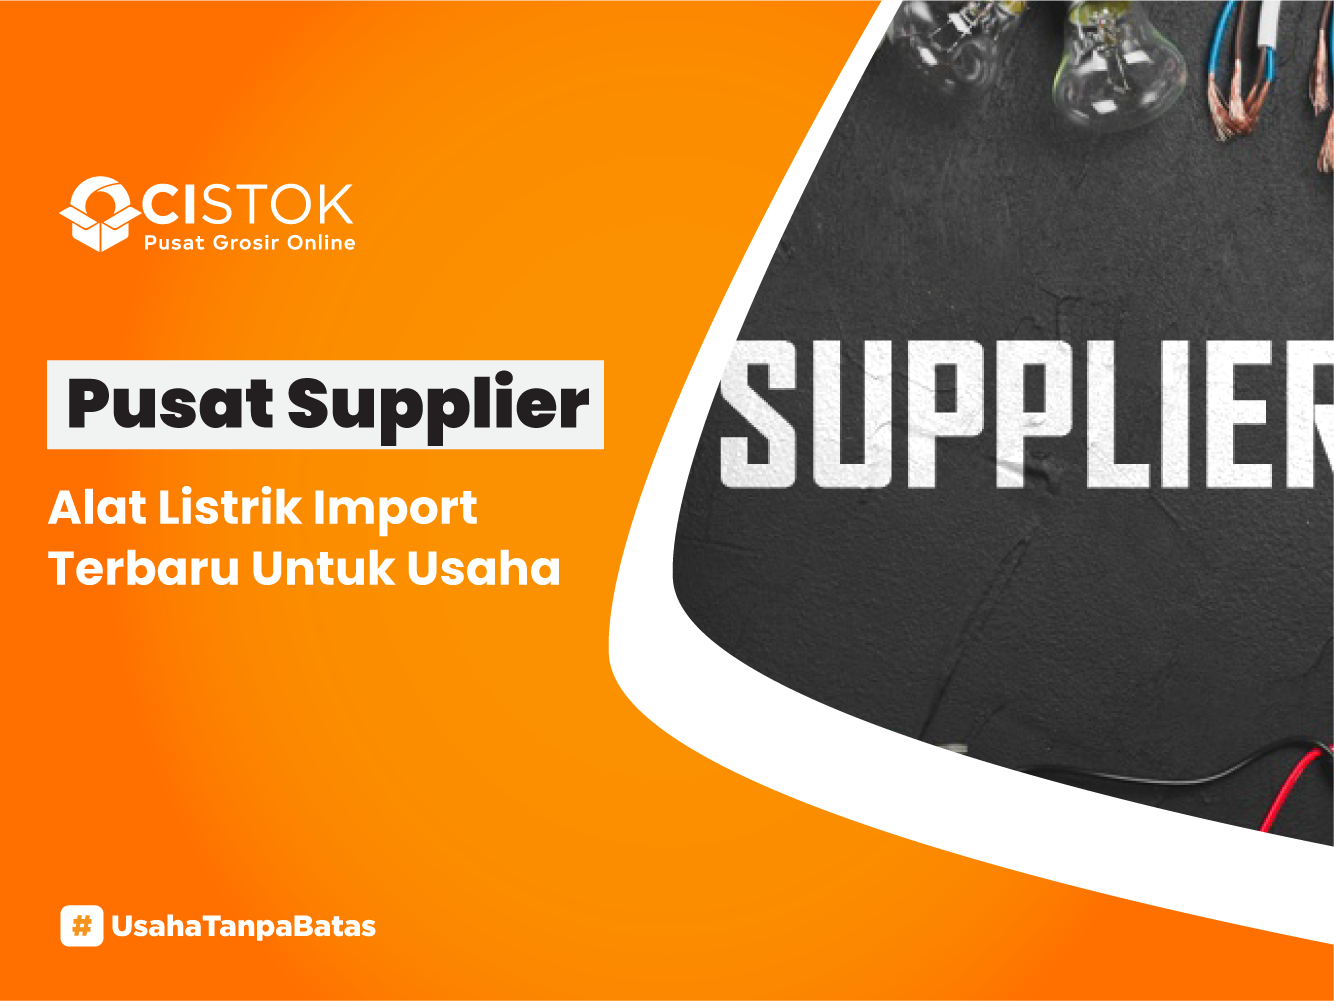 https://s3x.ocistok.com/ocistok/content/foto/Pusat Supplier Alat Listrik Import Terbaru Untuk Usaha.png